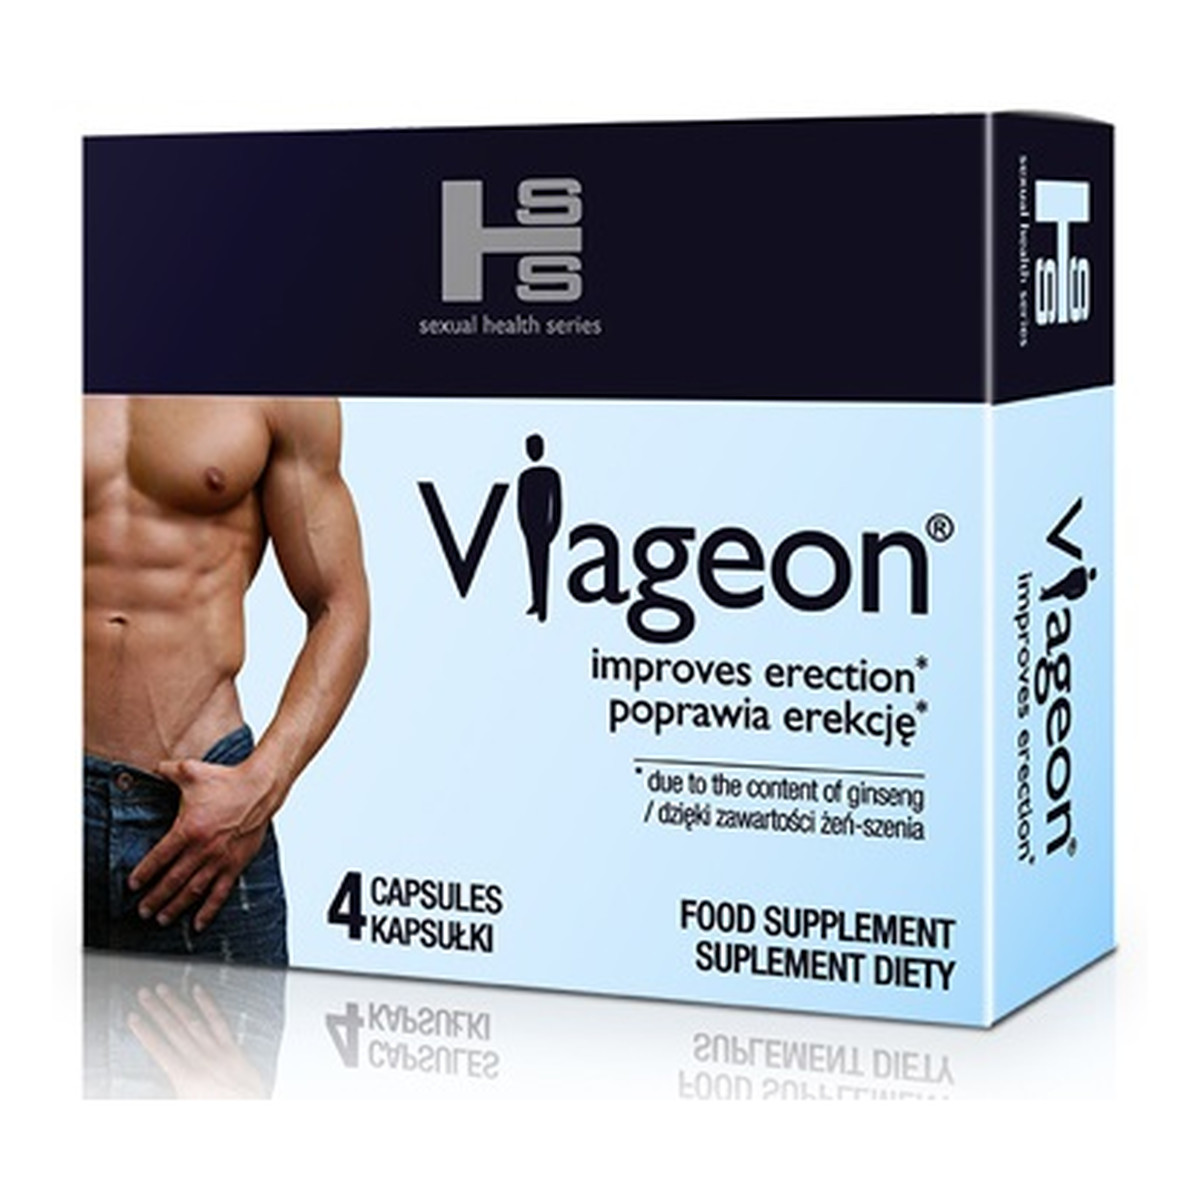 Sexual Health Series Viageon poprawia erekcję suplement diety 4 kapsułki